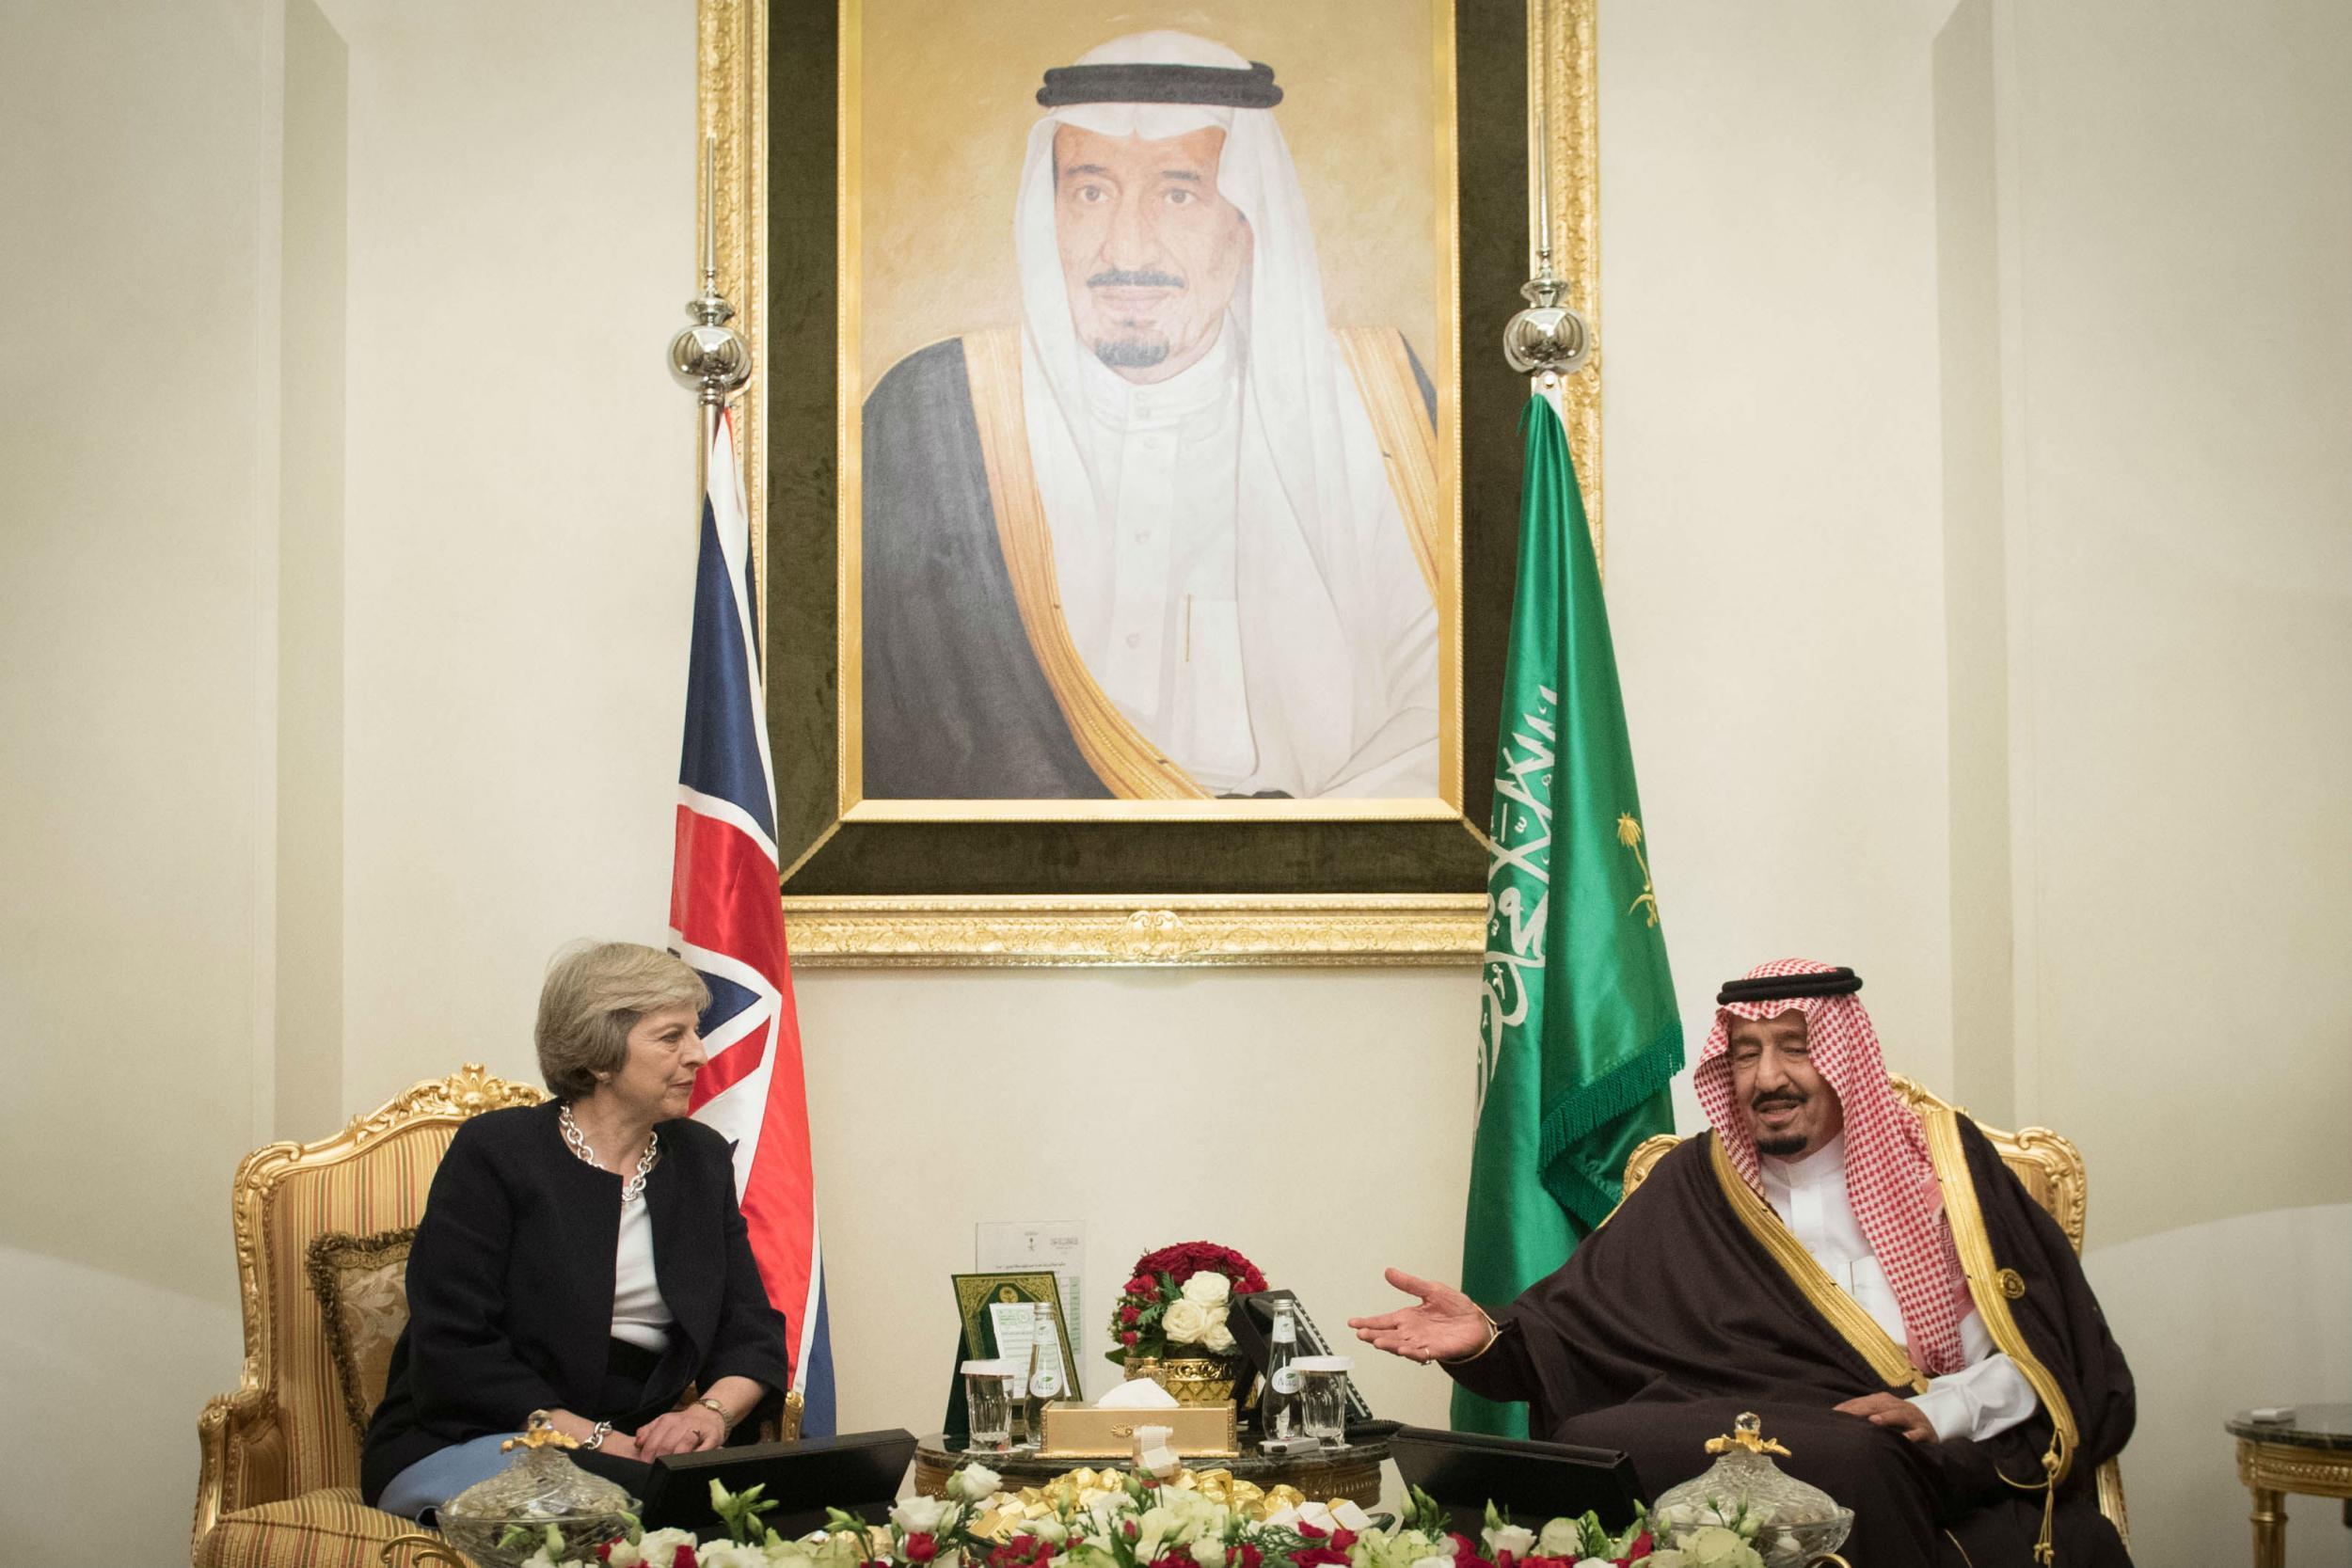 Ms May met with King Salman of Saudi Arabia last year in Bahrain